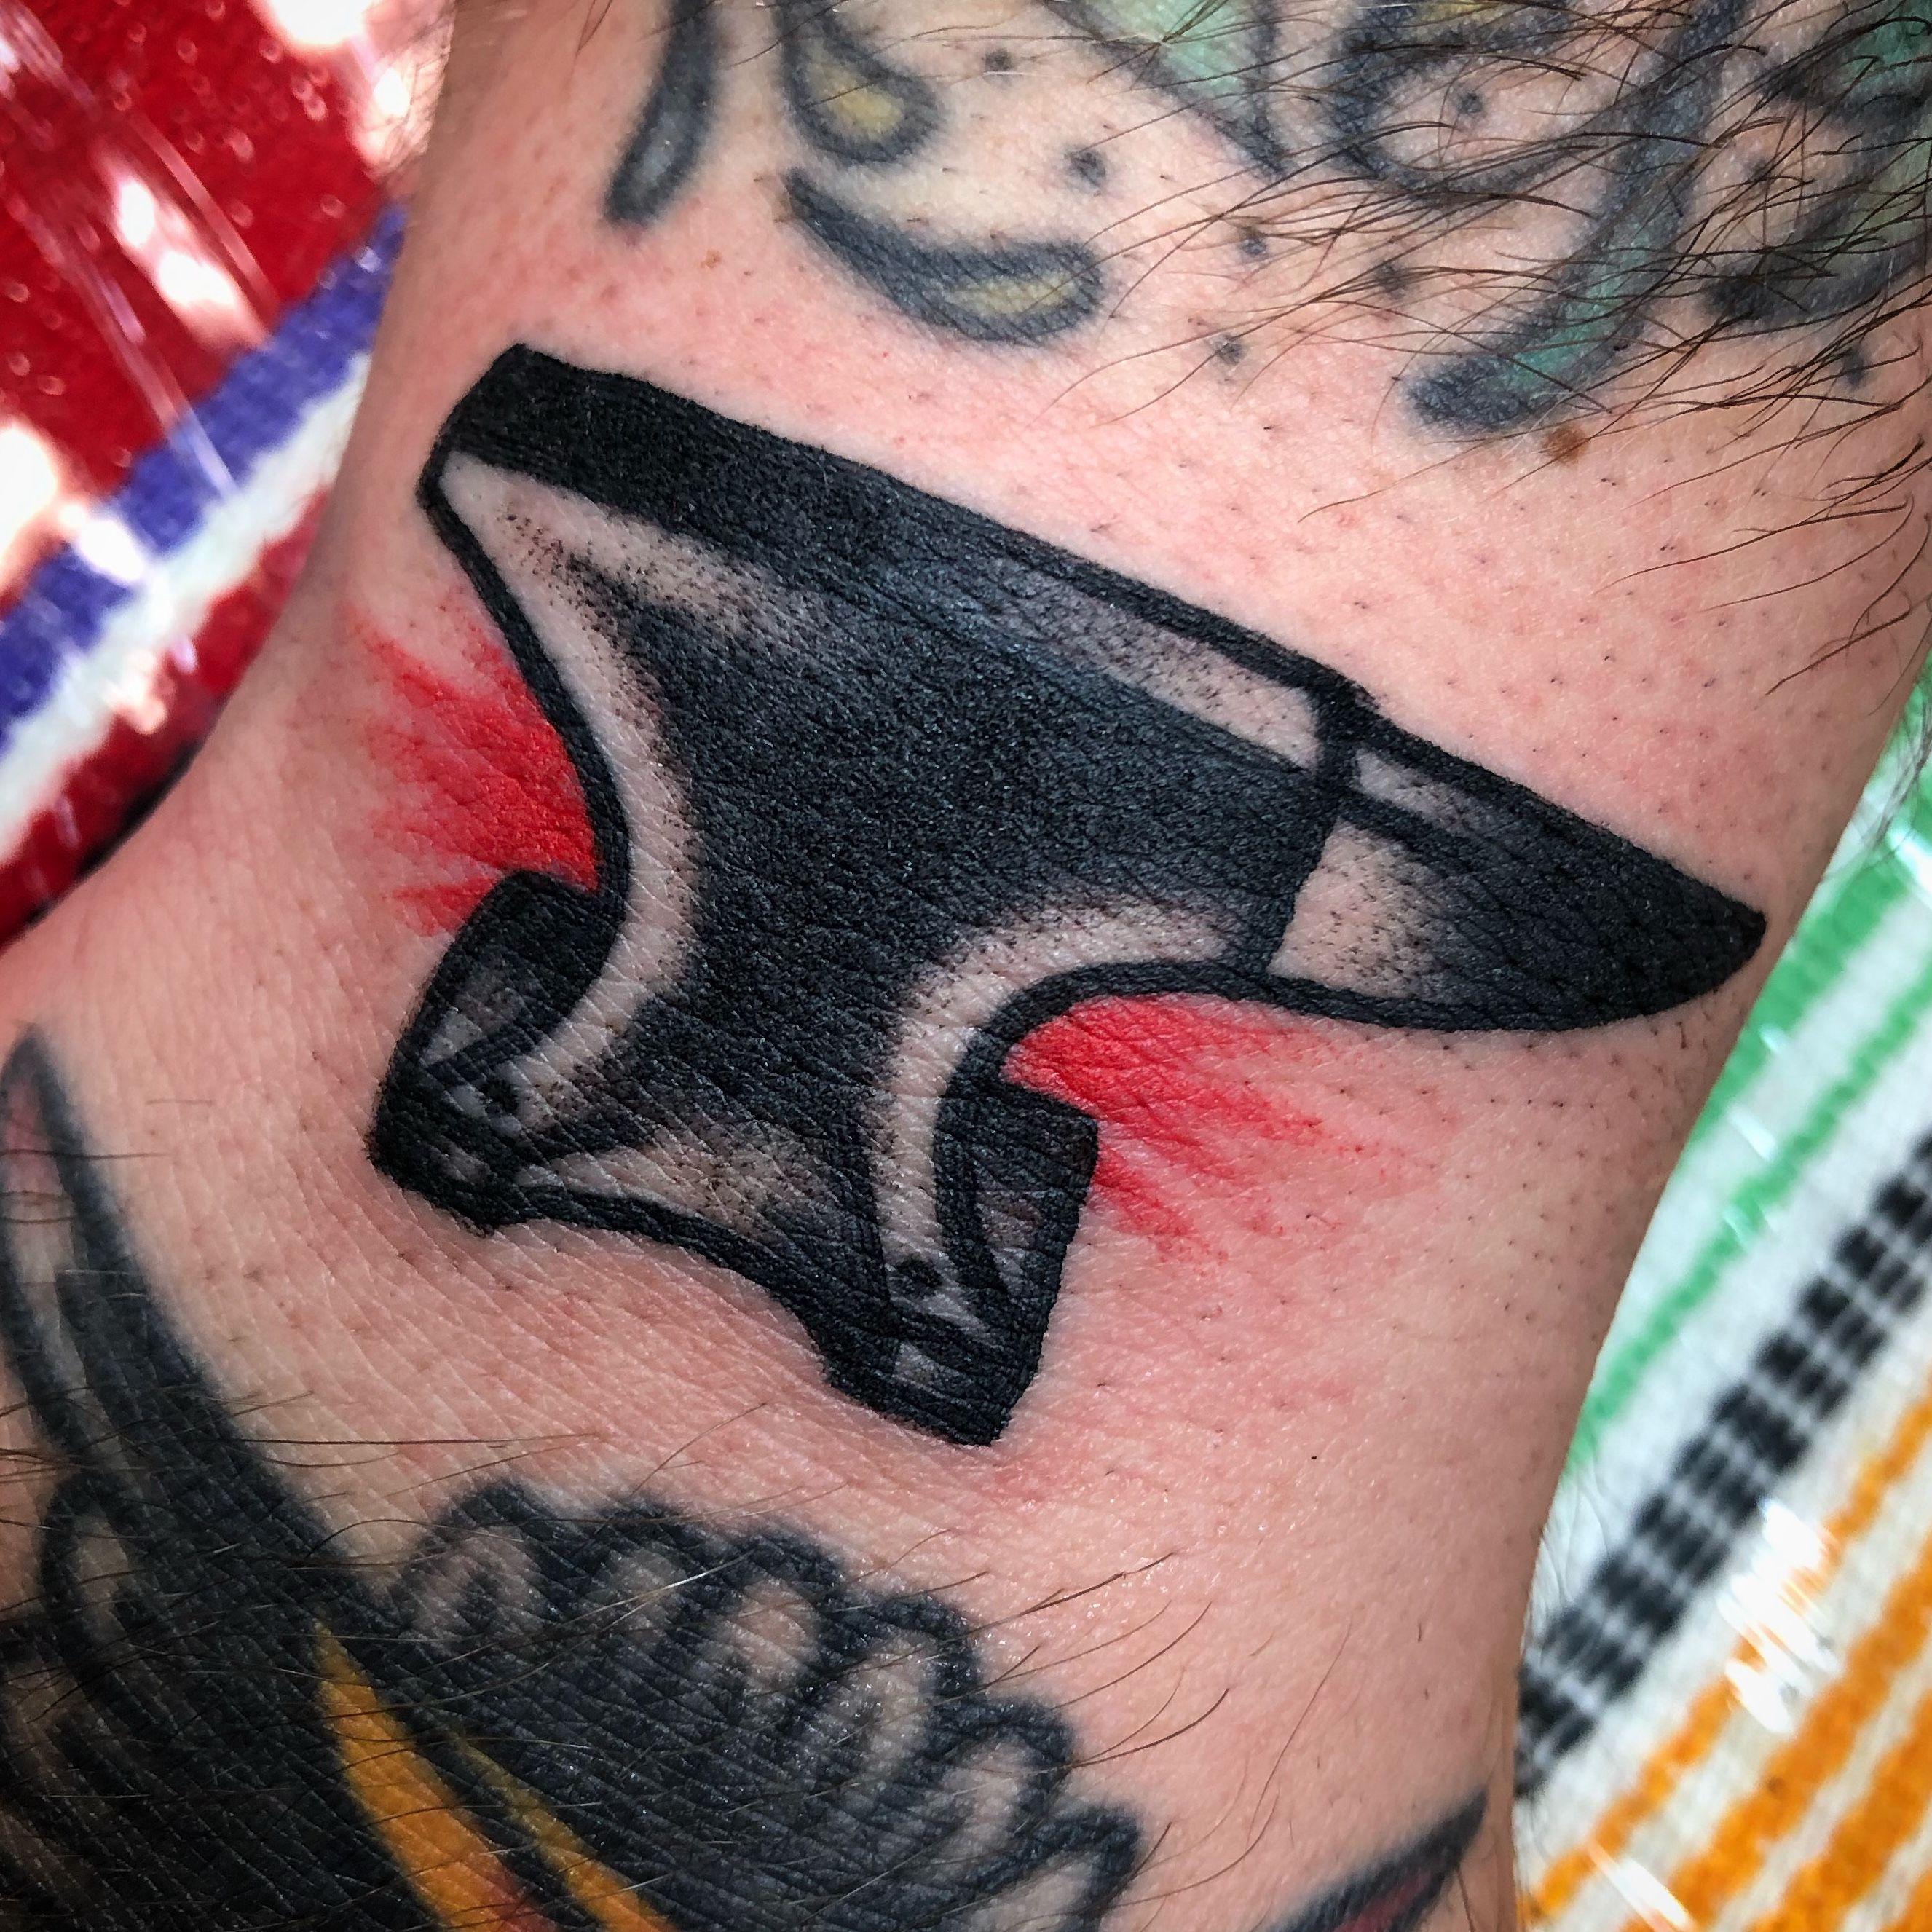 tattoo of a small hatchet axe on the forearm - Arthub.ai